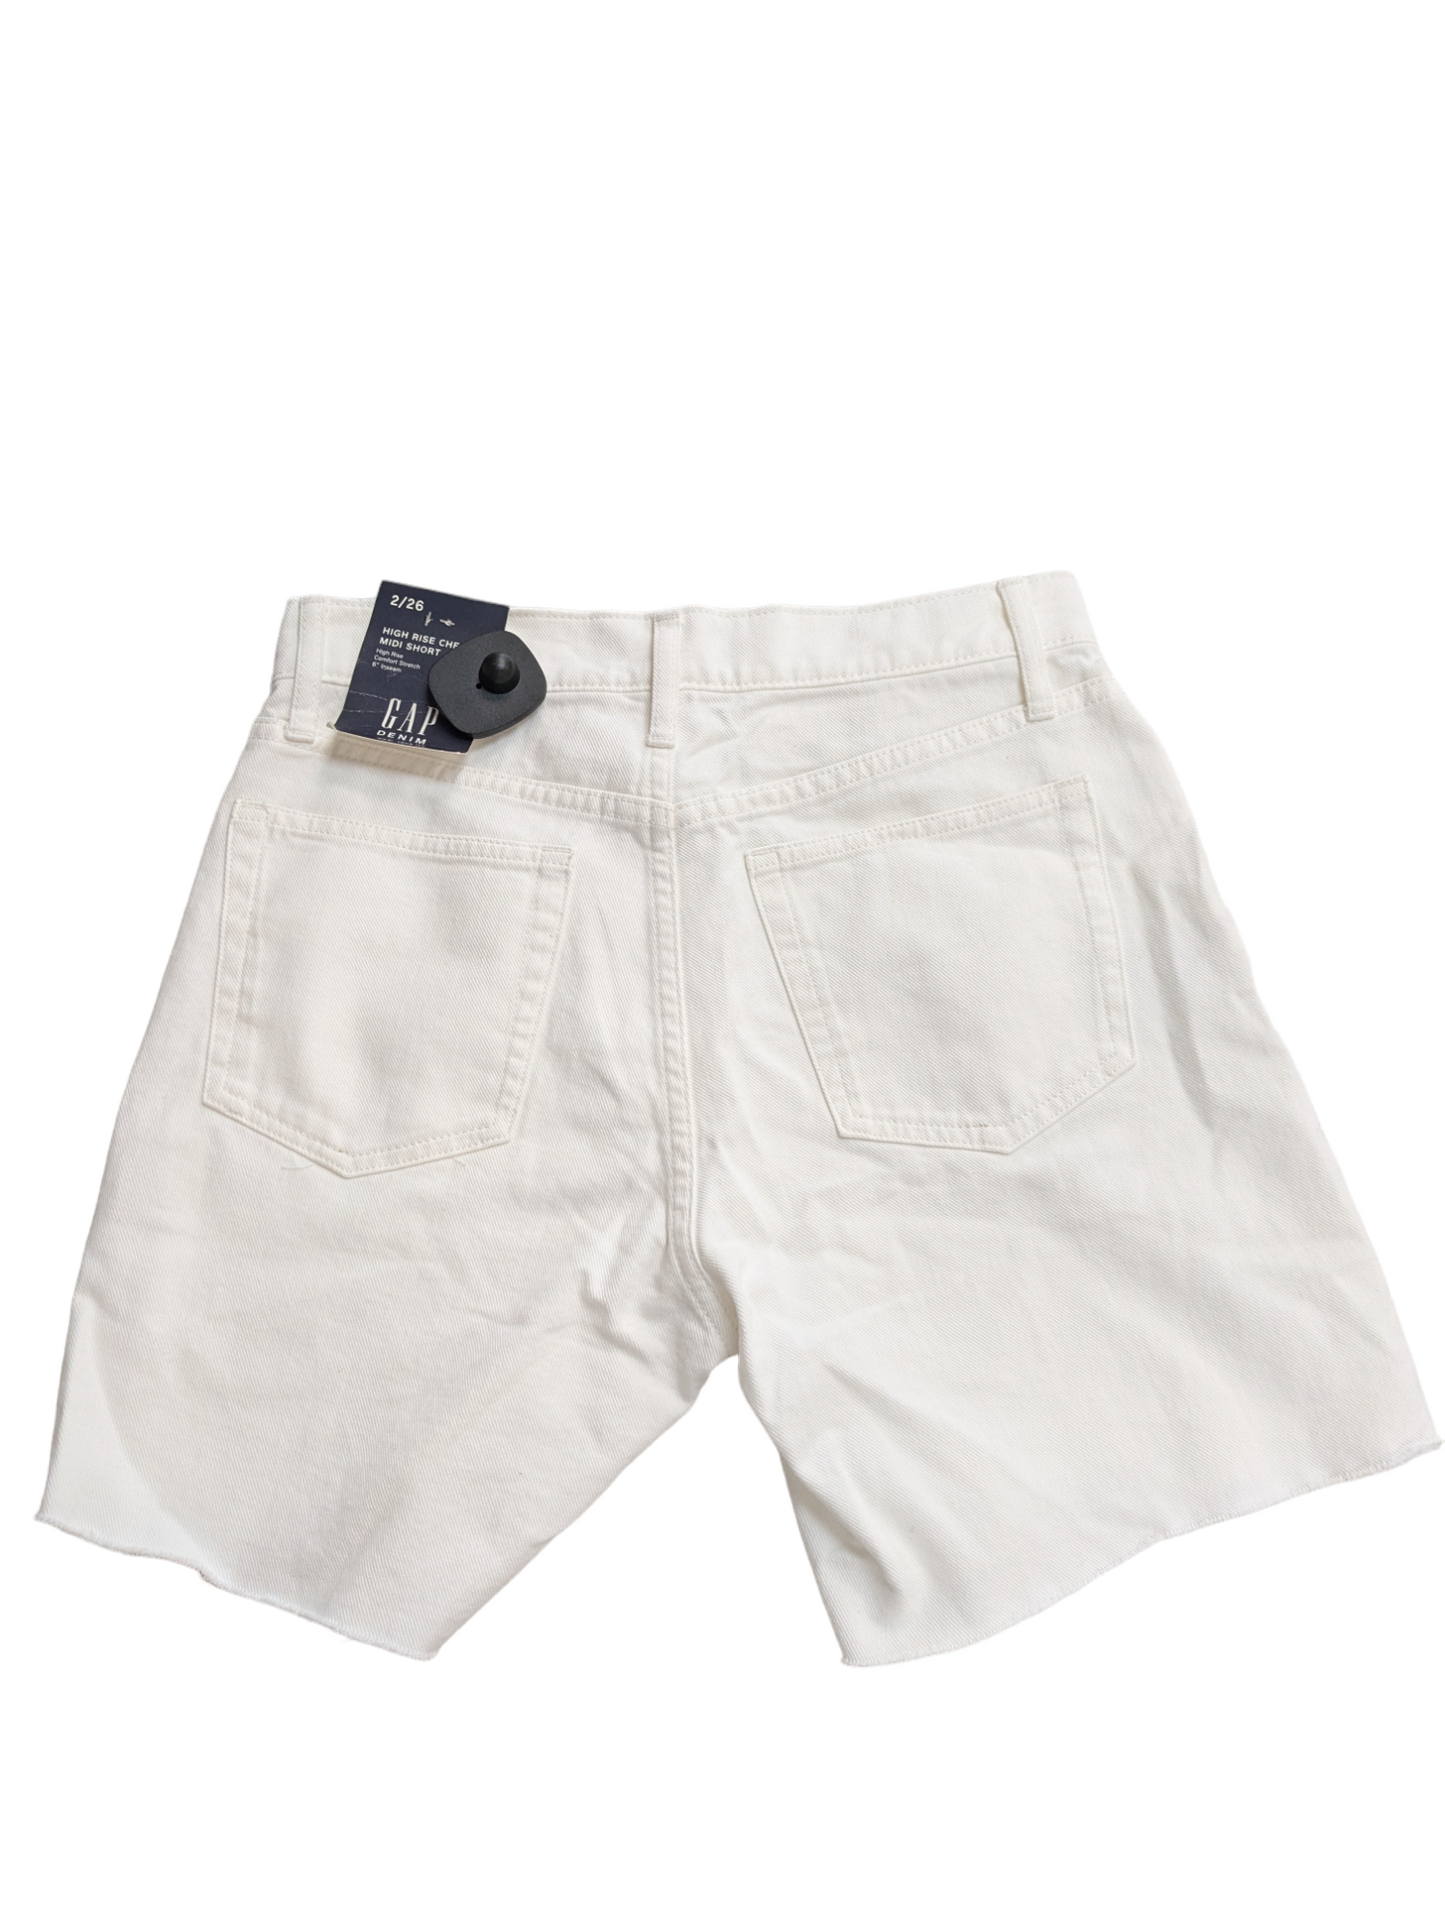 White Shorts Gap, Size 2